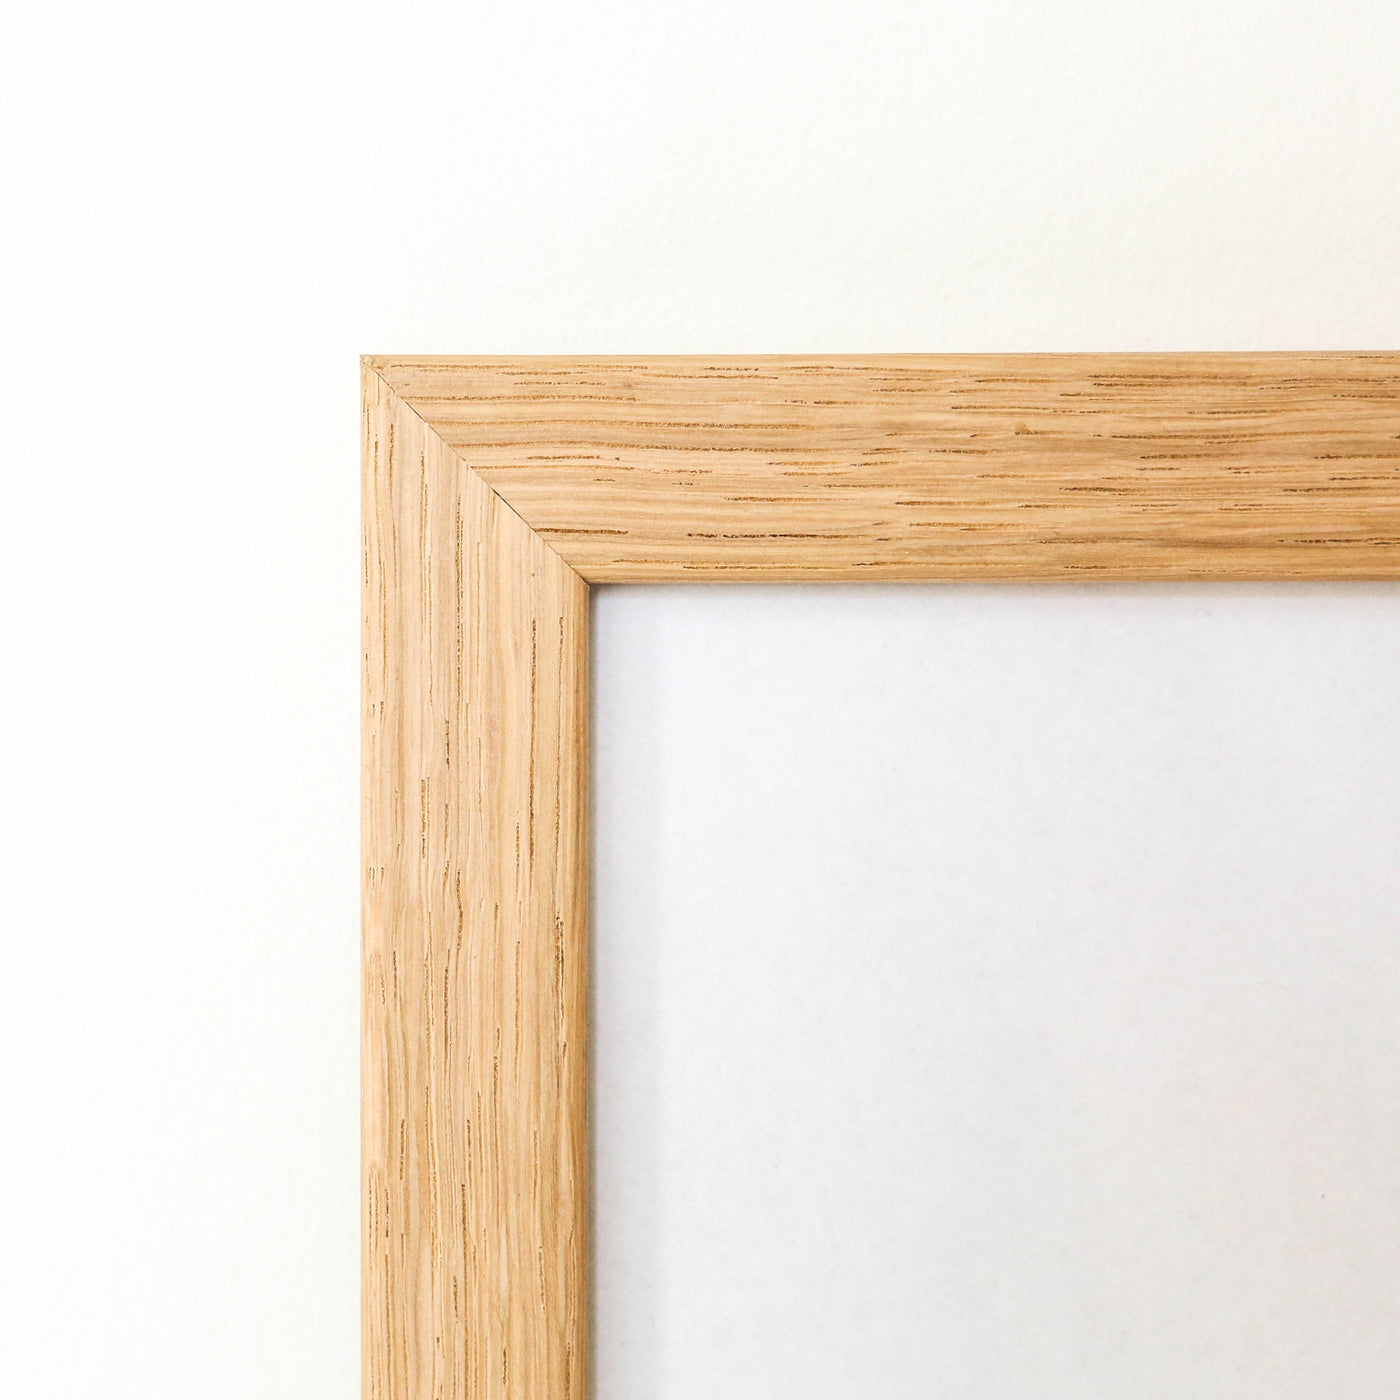 Solid Oak Wood Frame - A4